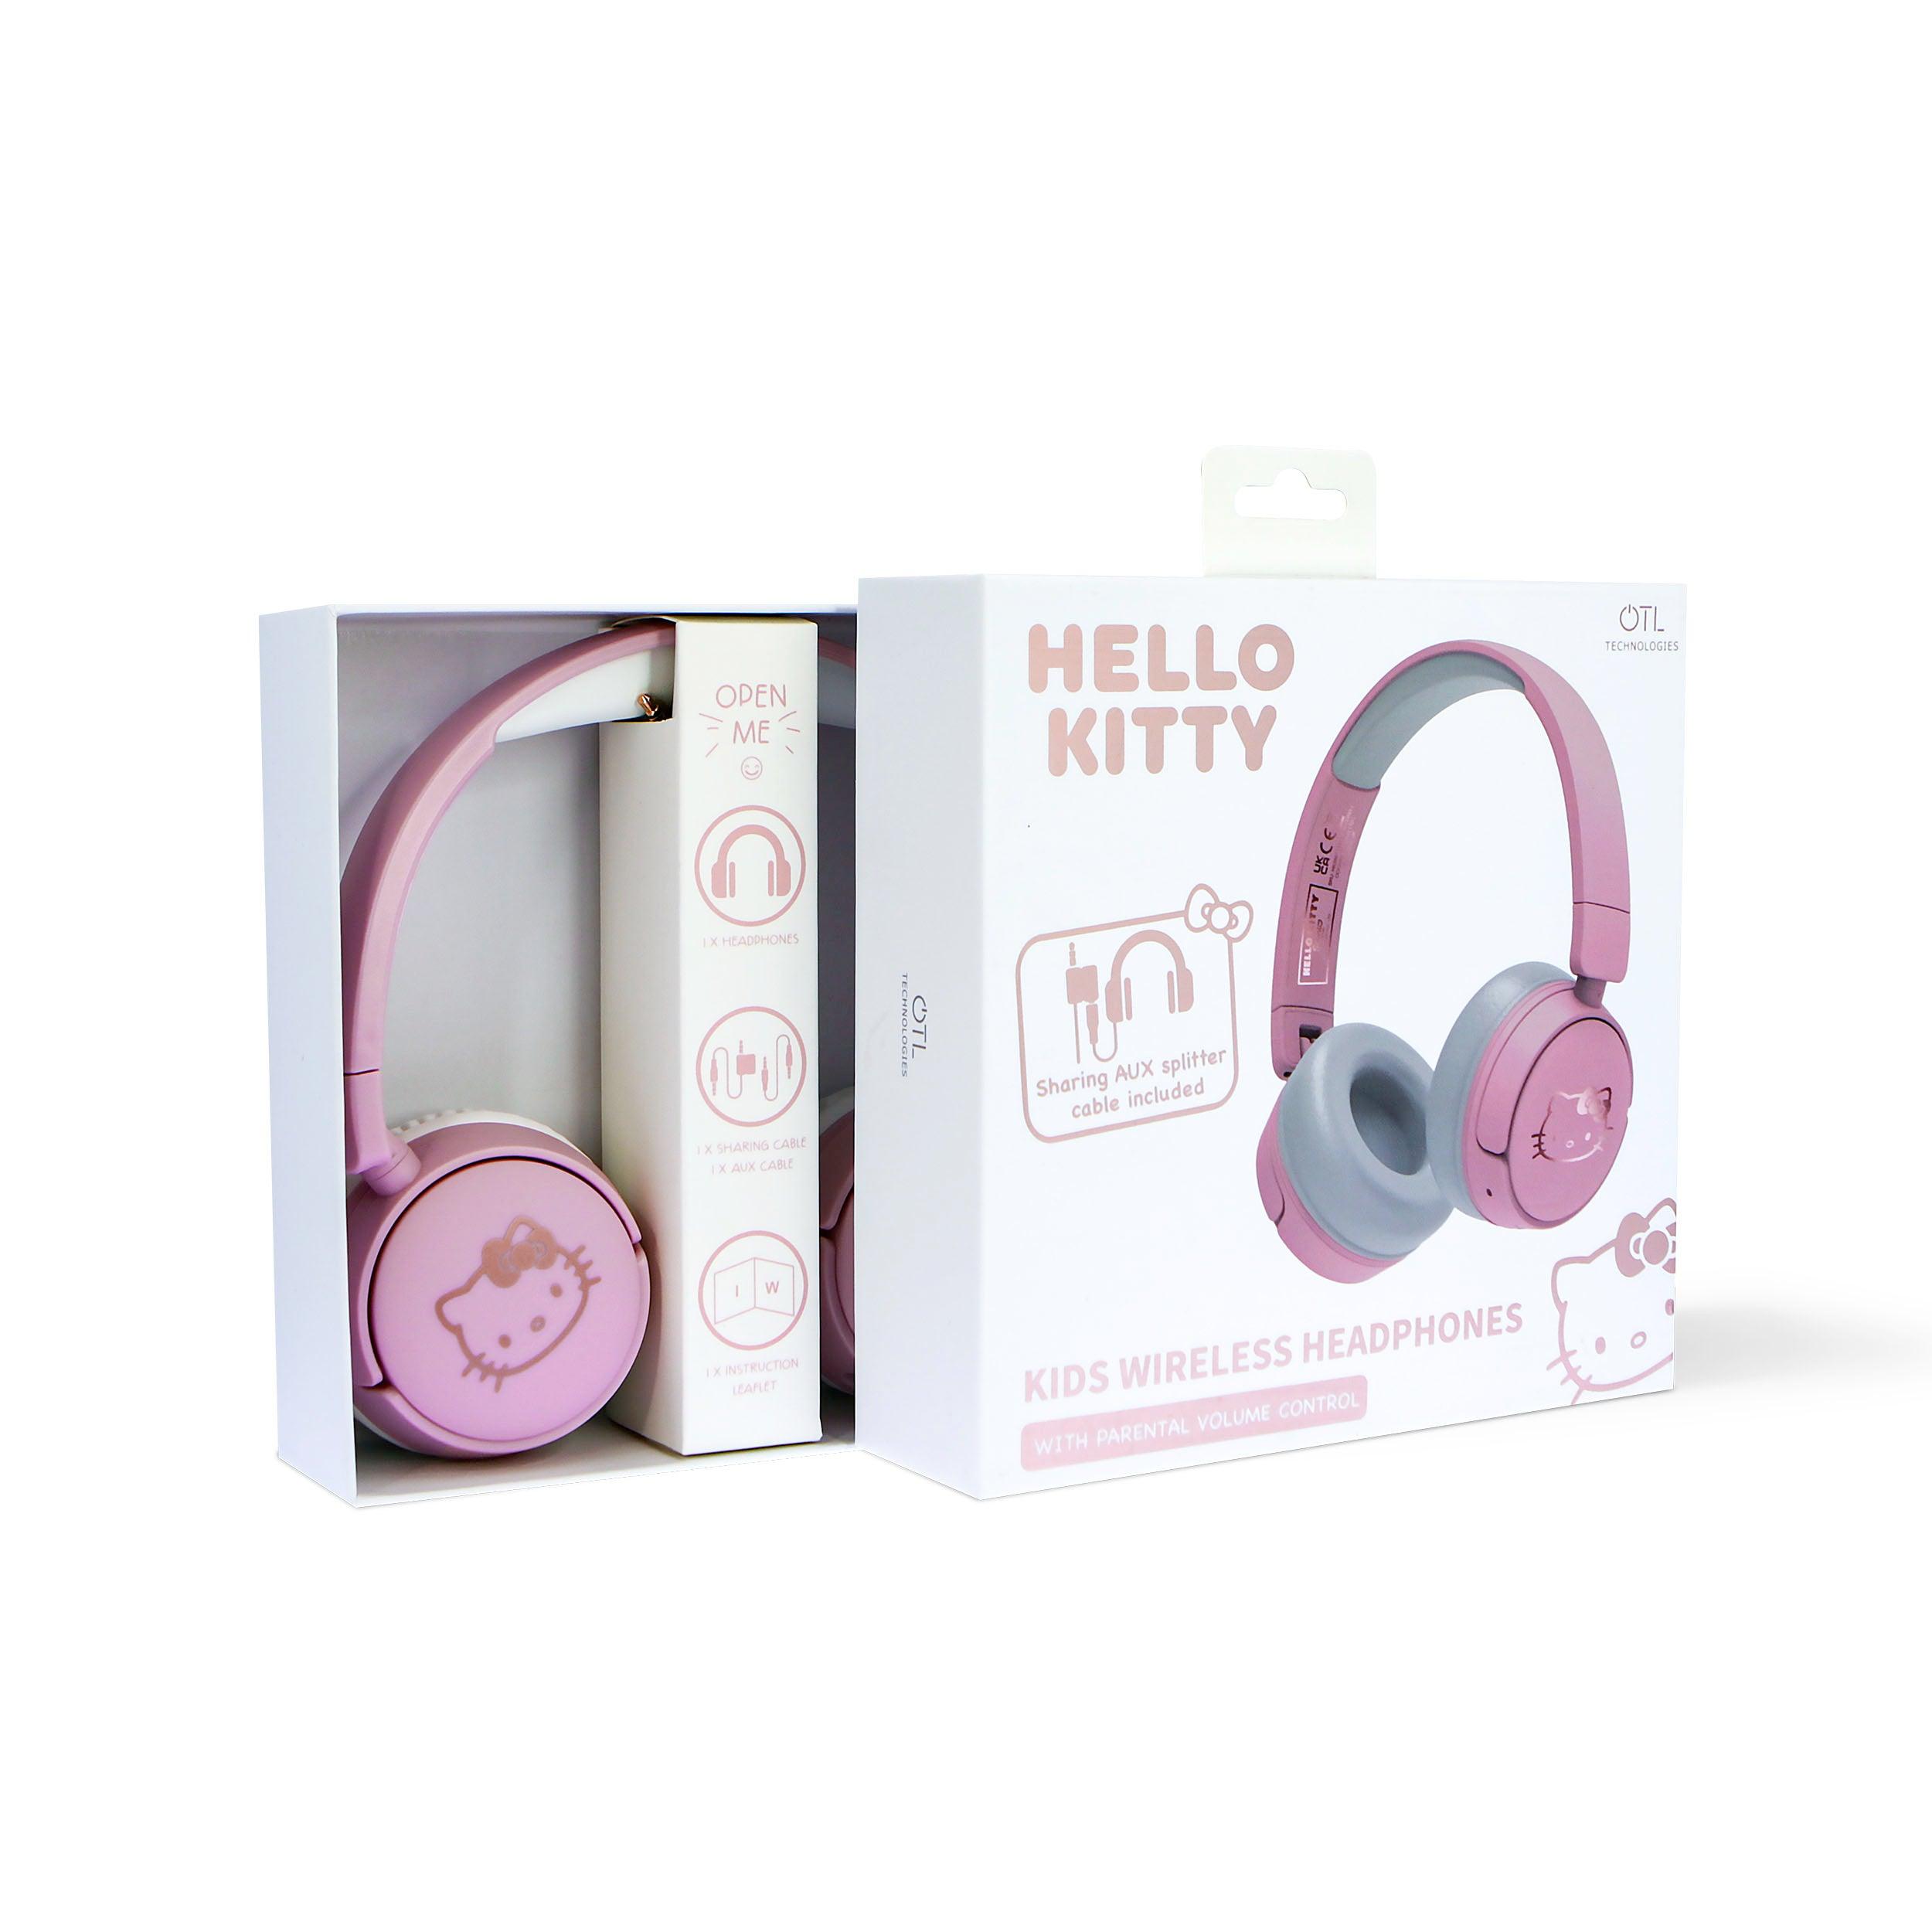 Hello Kitty Kids Wireless Headphones - Pink / Rose Gold - childrensheadphones.co.uk